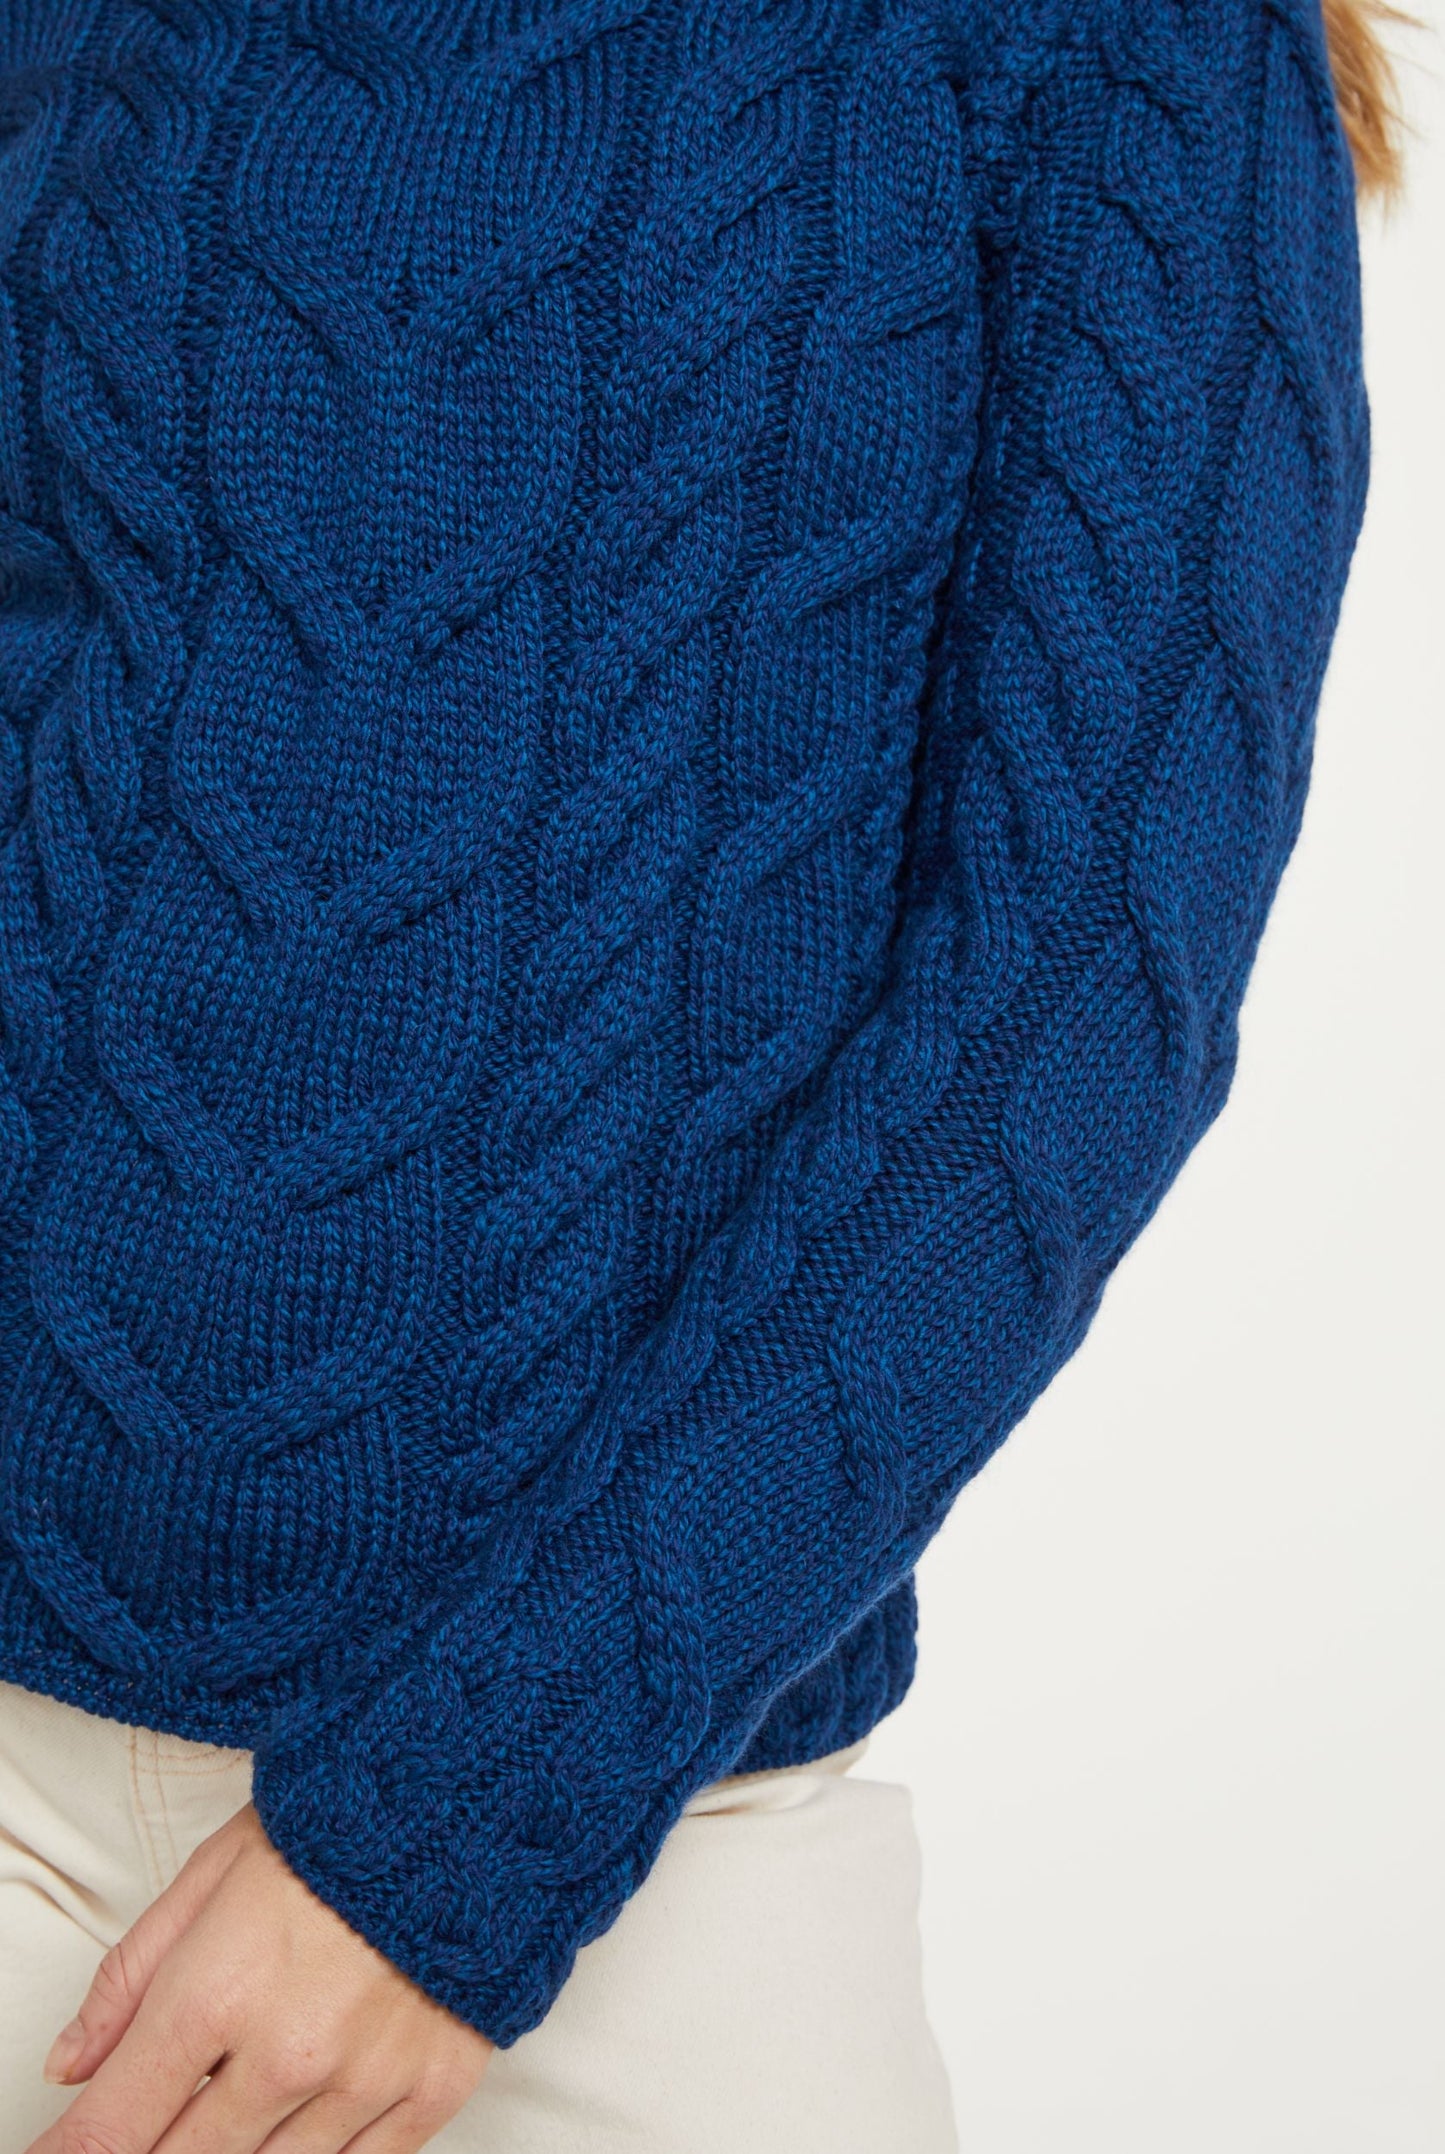 Listowel Ladies Aran Cable Pullover - Deep Blue